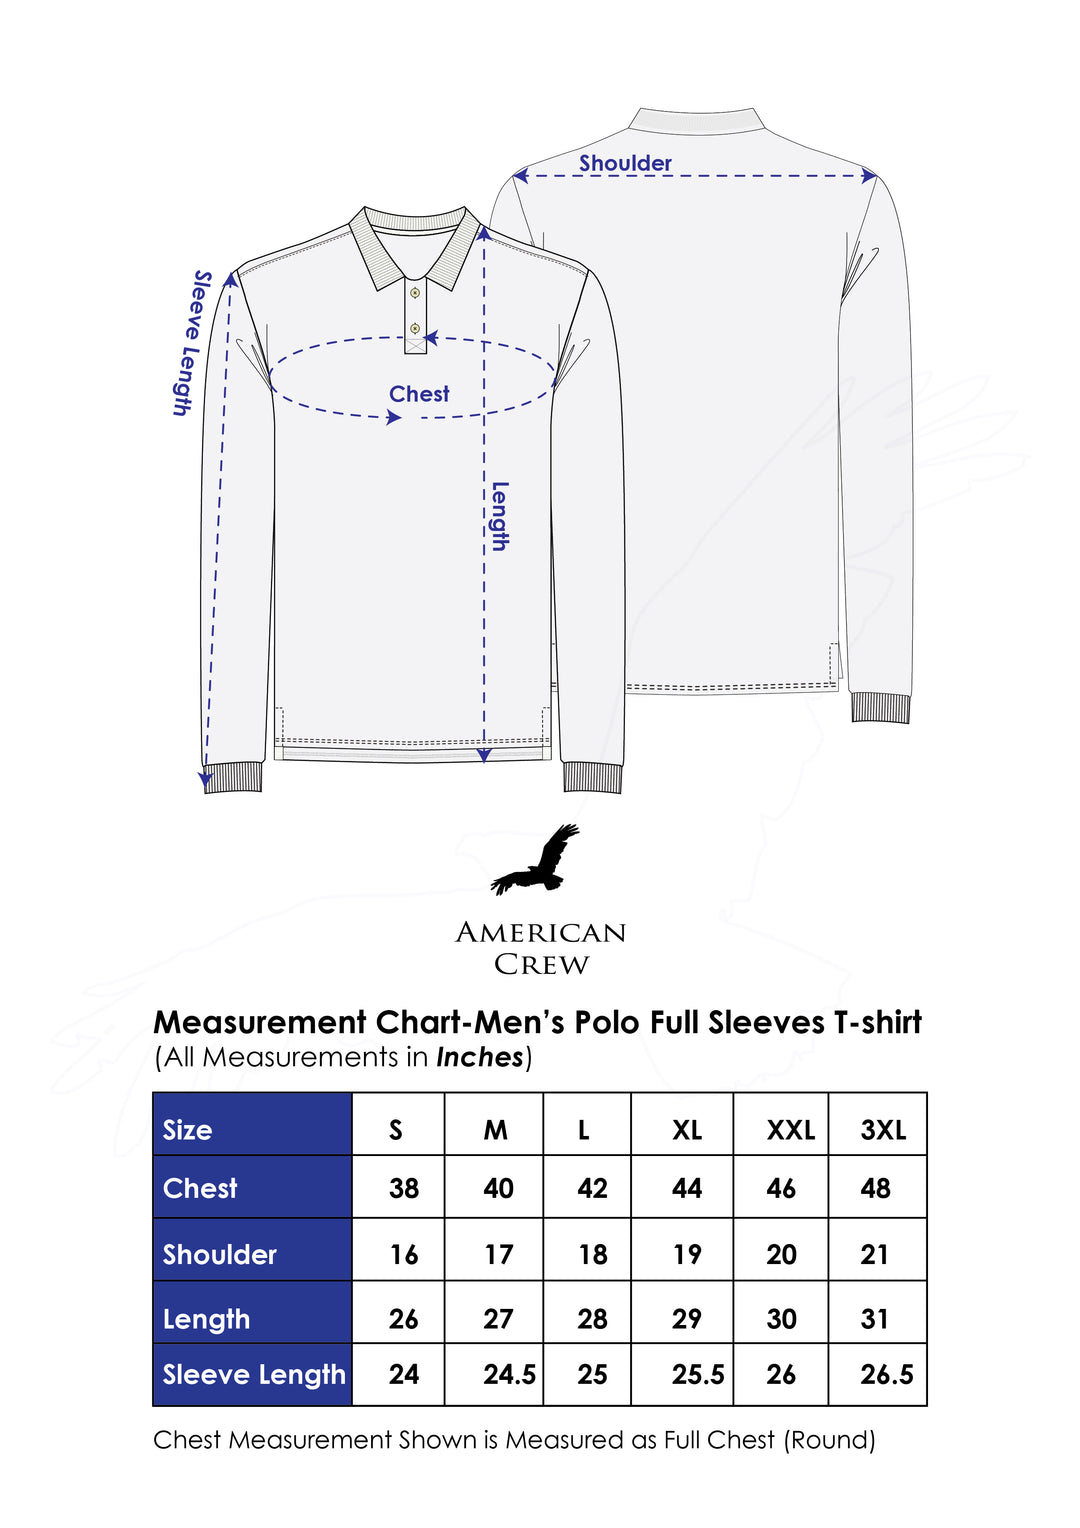 Striped Polo T-Shirt for Men - Black,Grey Melange&Charcoal